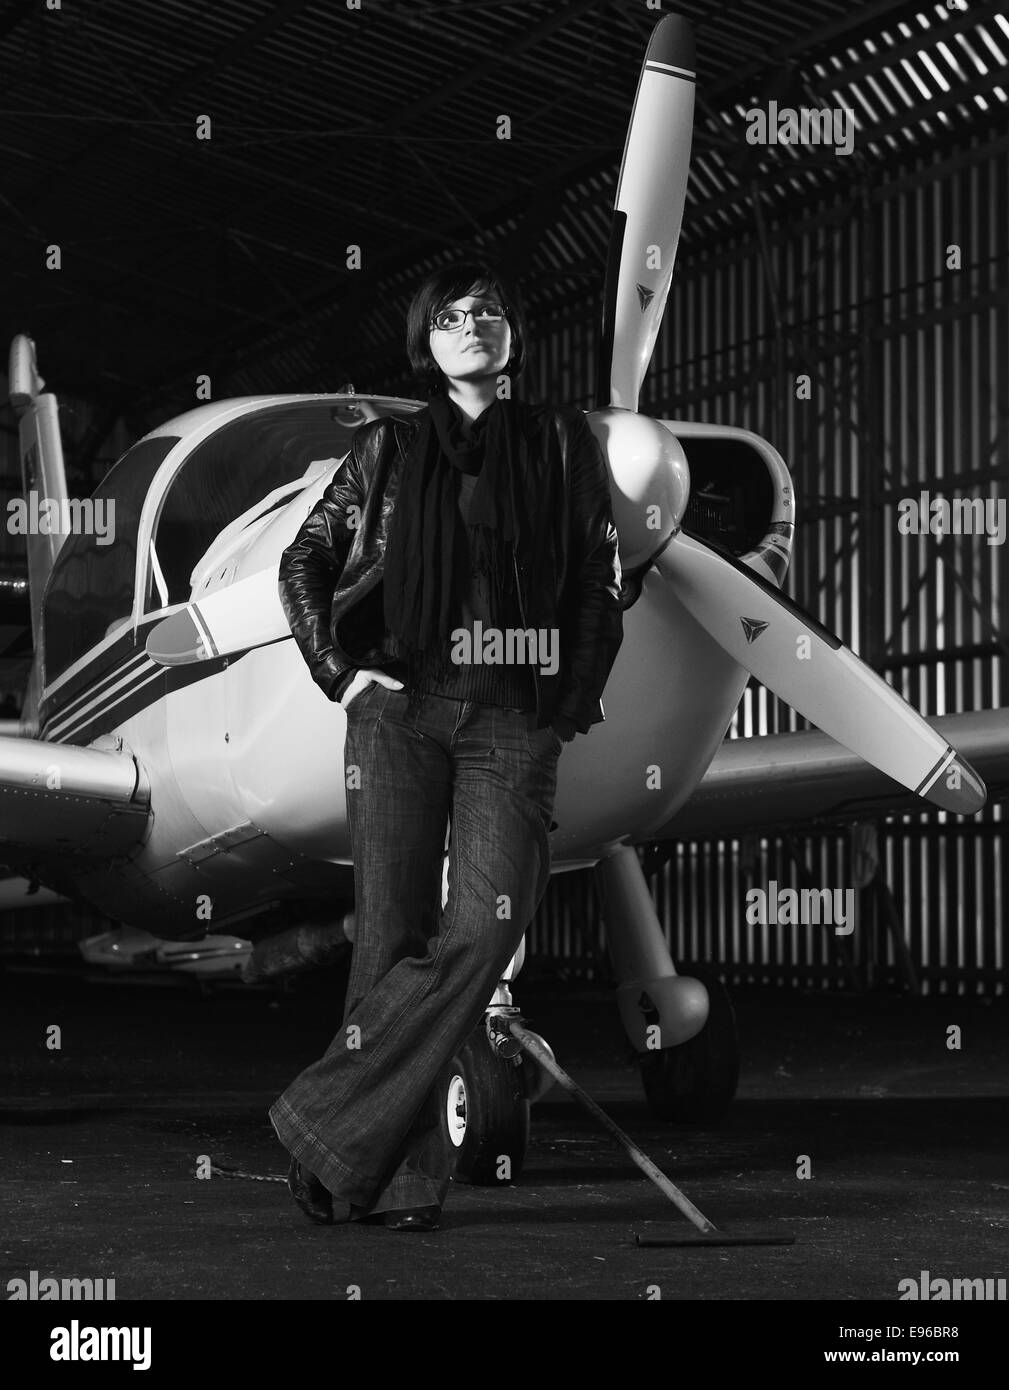 junge Frau mit einem Privatflugzeug Stockfoto